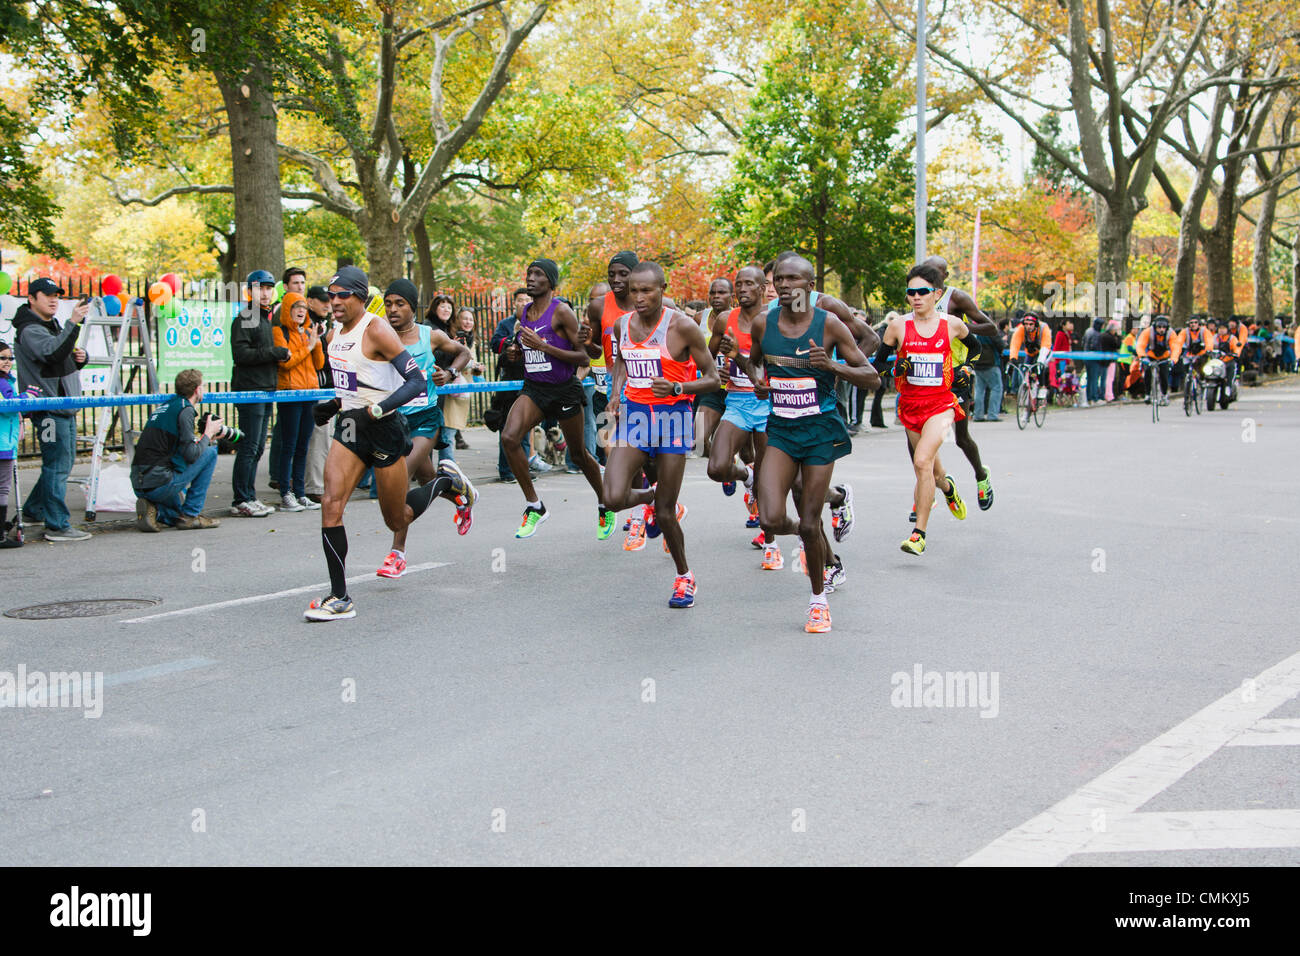 New York, USA. 3rd November 2013. Men's lead pack of runners nearing mile 12 in ING New York City Marathon, November 3, 2013. © Kristin Lee/Alamy Live News Stock Photo